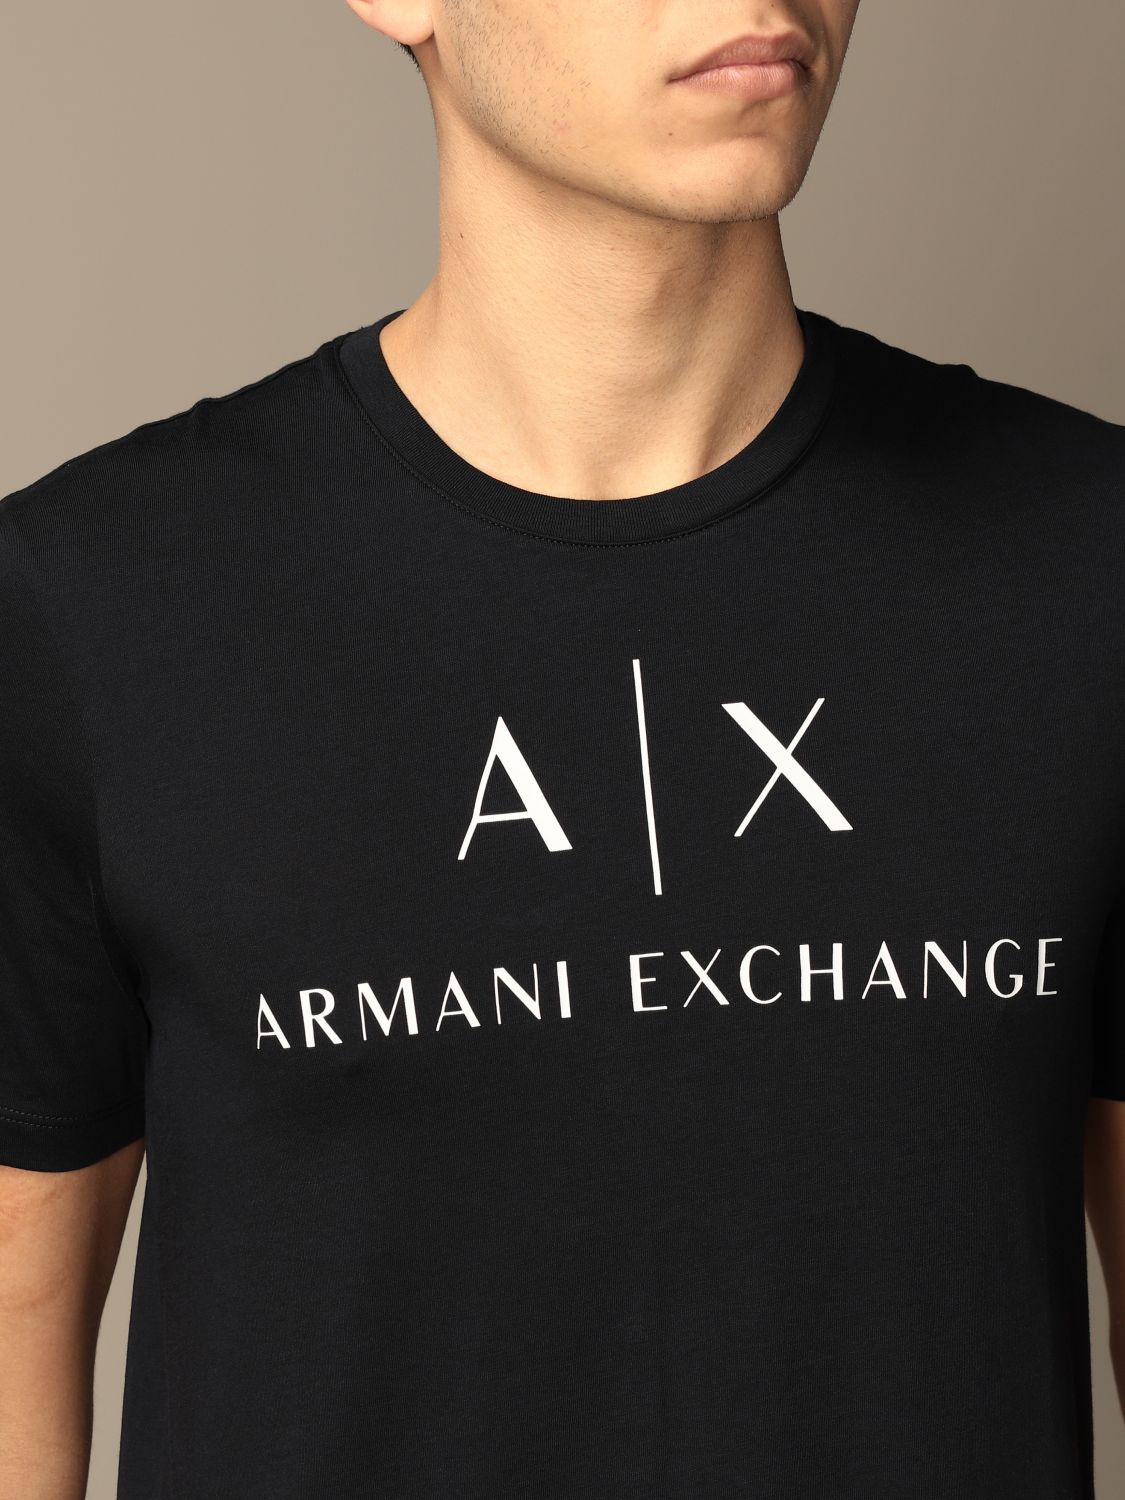 ARMANI EXCHANGE: T-shirt AX logo - Blue | Armani Exchange t-shirt 8NZTCJ online